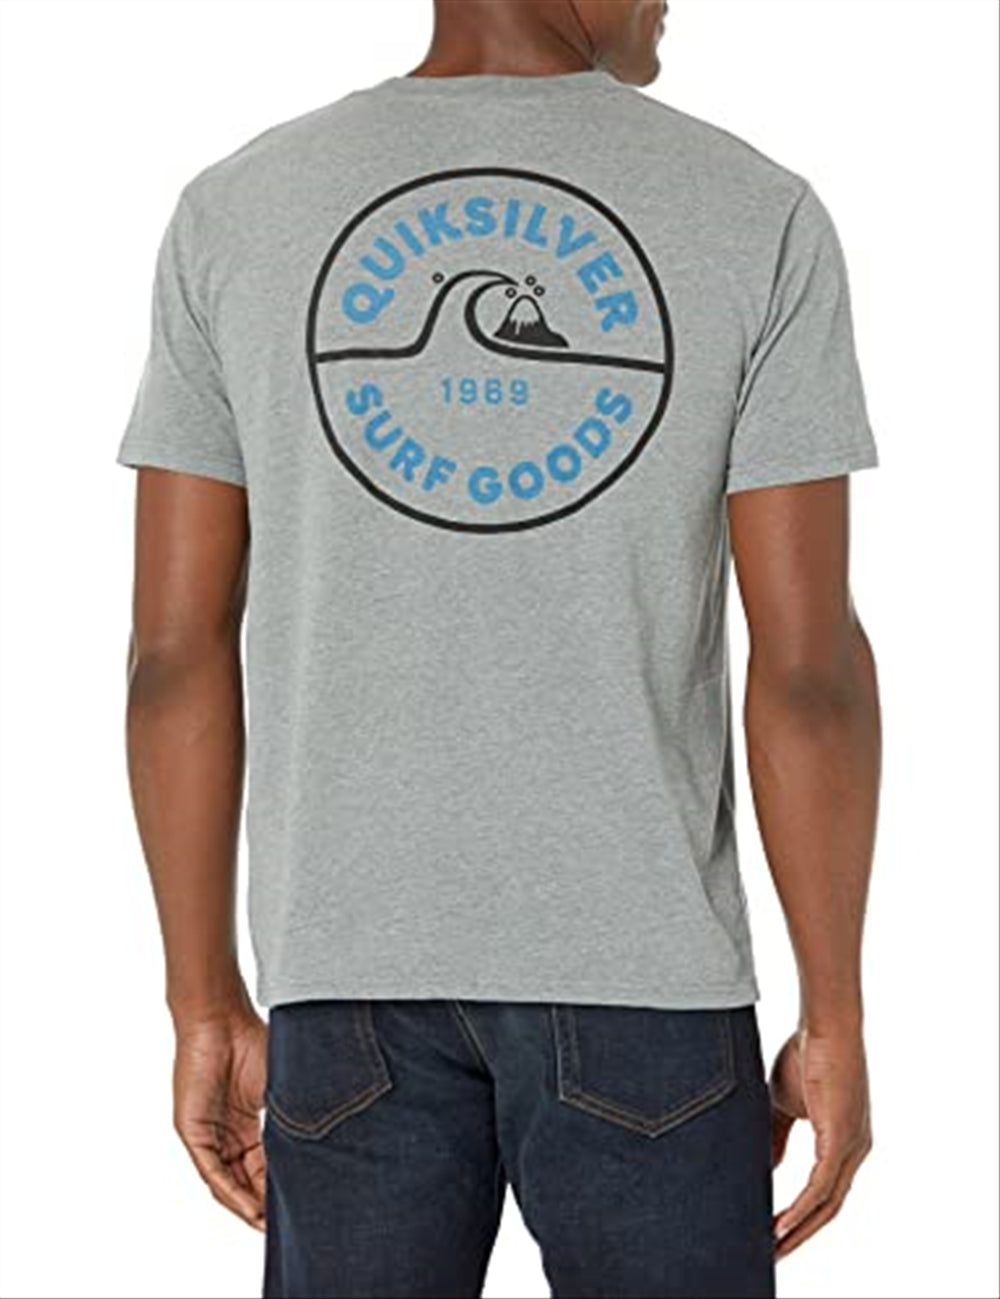 Quiksilver Men's Shape Up Mod T-shirt Gray Size Medium